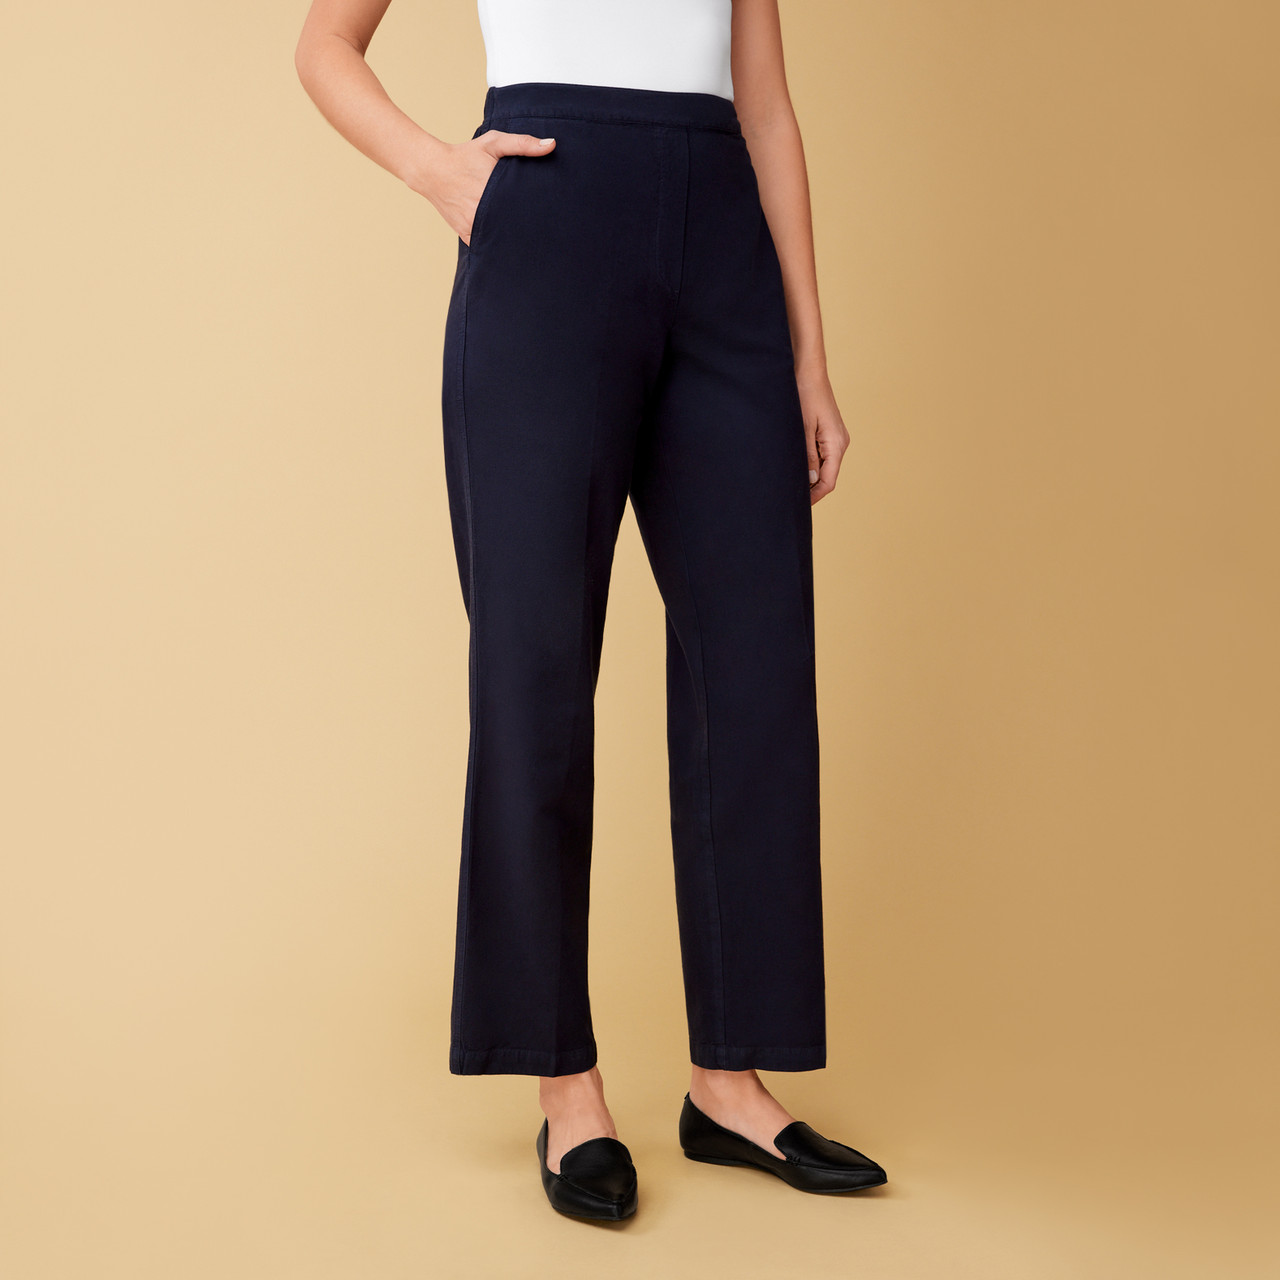 New Basic Editions Capri Pants Size M Blue Elastic Waist Pockets